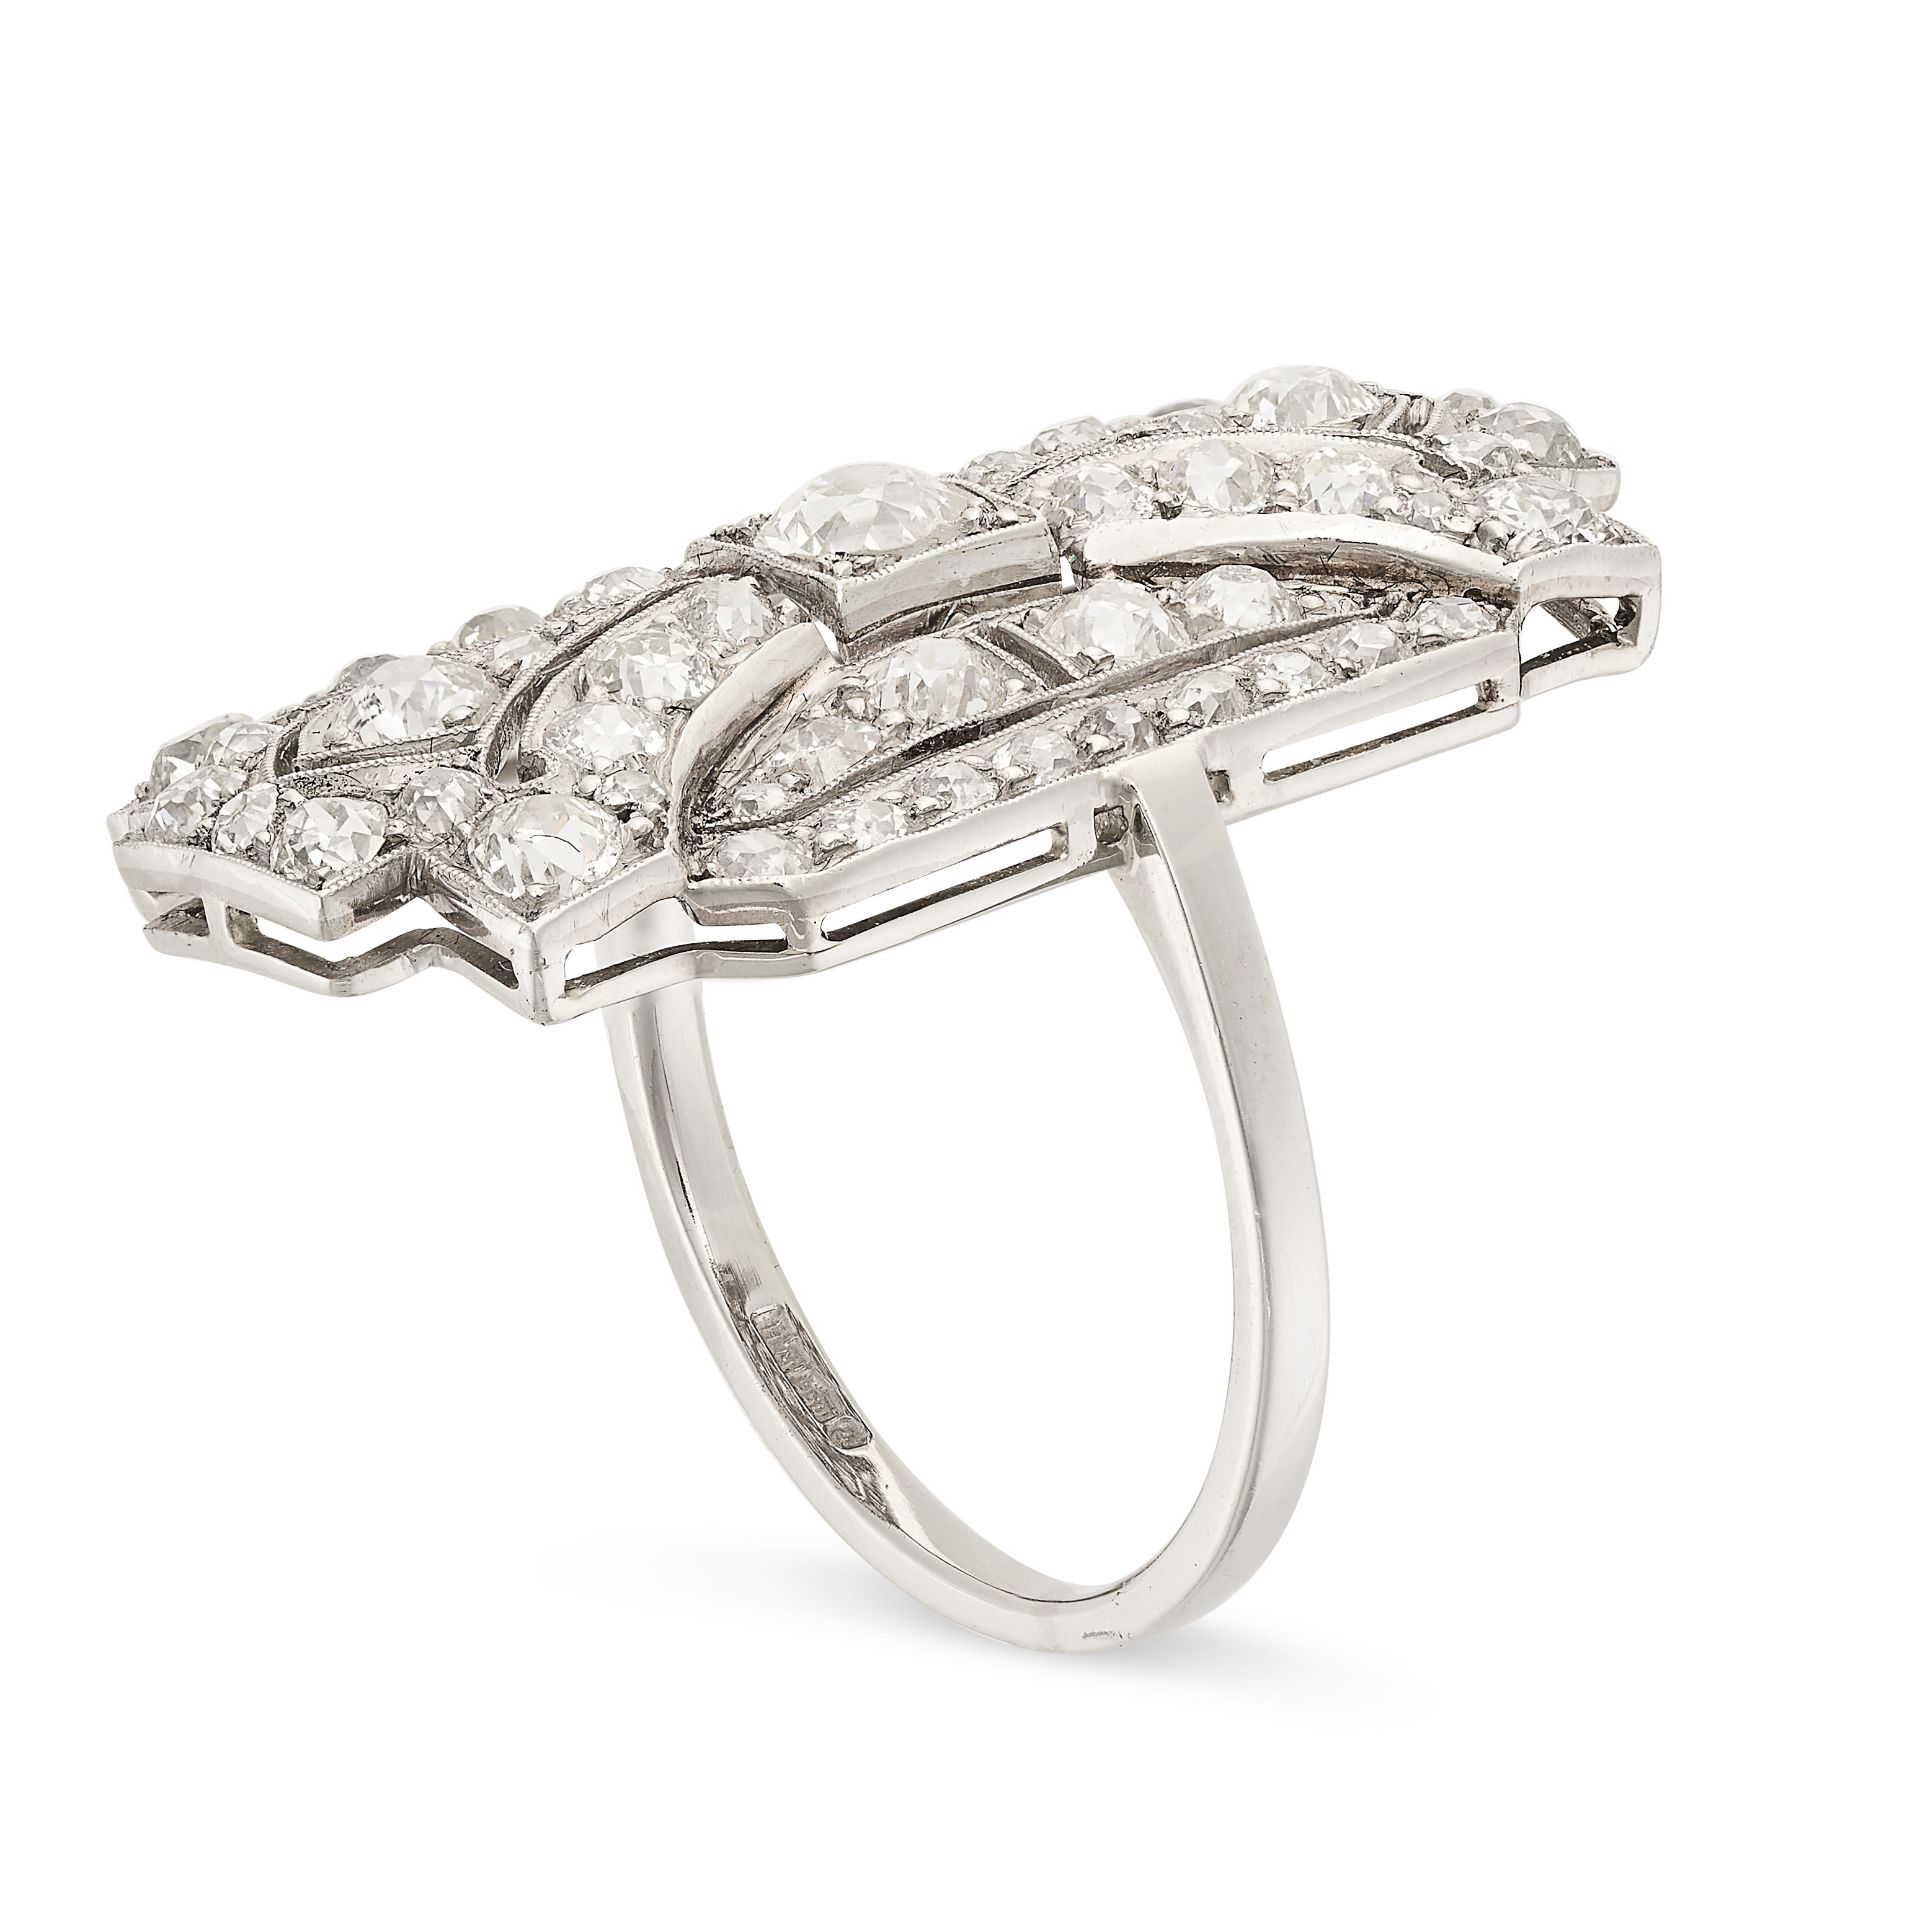 AN ANTIQUE DIAMOND PLAQUE RING in platinum, set with old cut diamonds totalling 2.0-2.2 carats, H. - Bild 2 aus 2